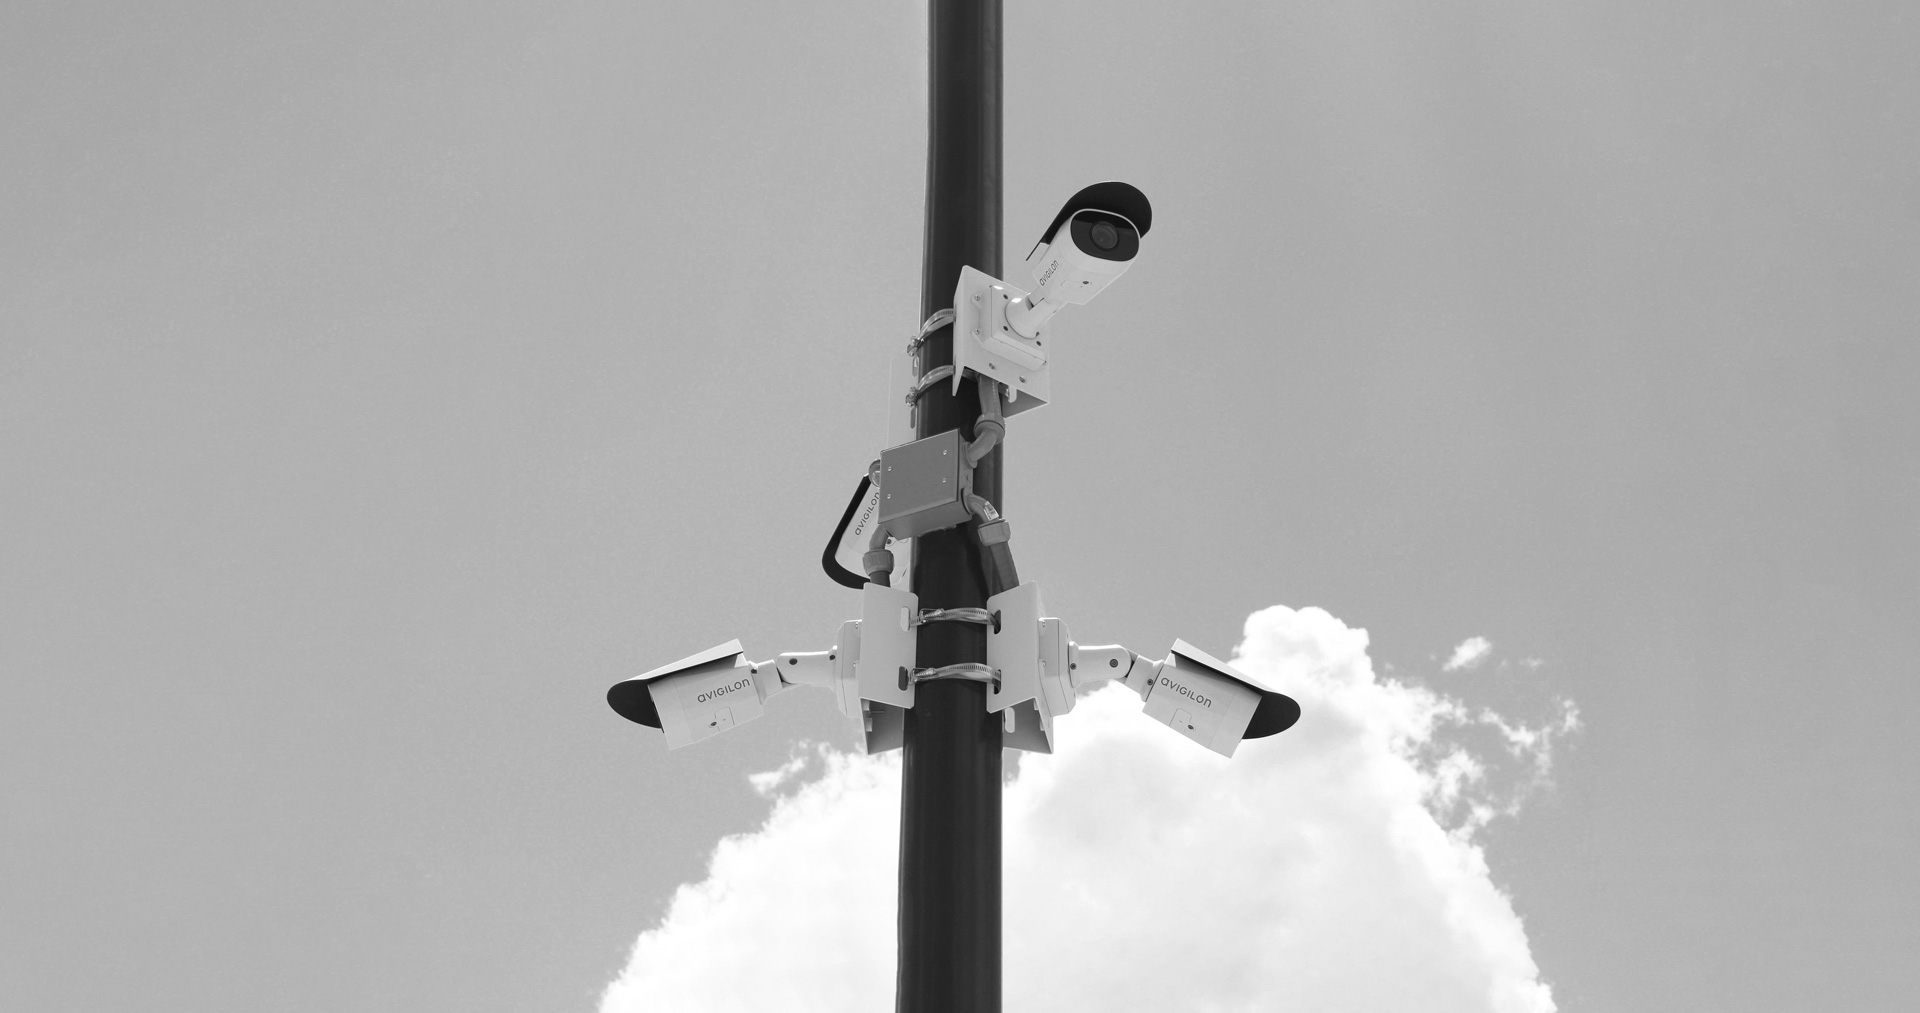 Video Surveillance and Analytics